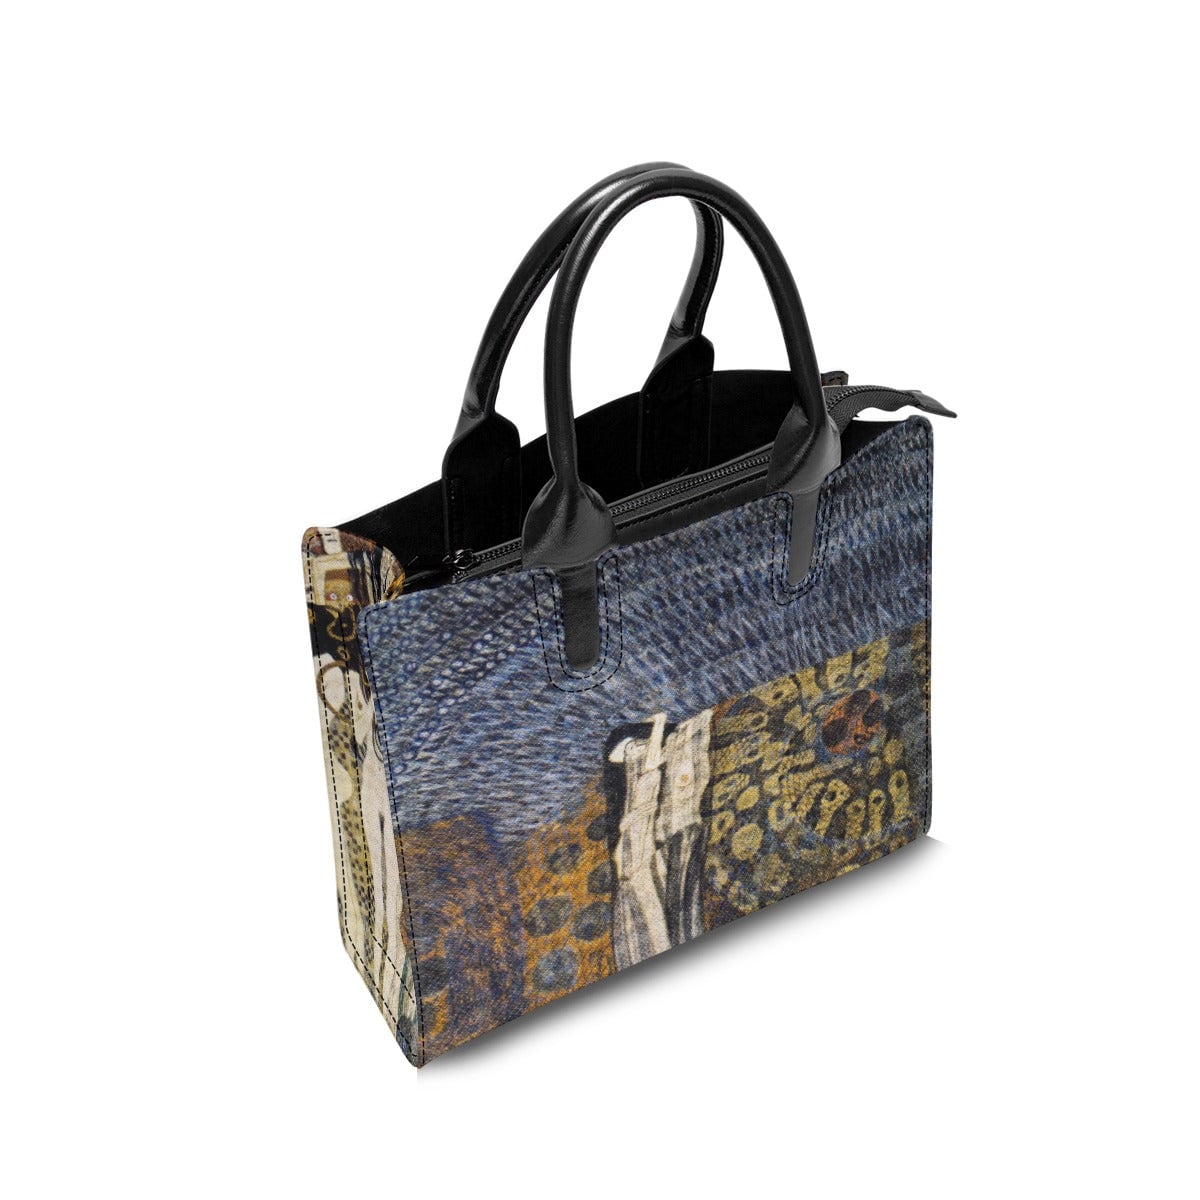 The Hostile Powers Gustav Klimt Art Fashion Handbag